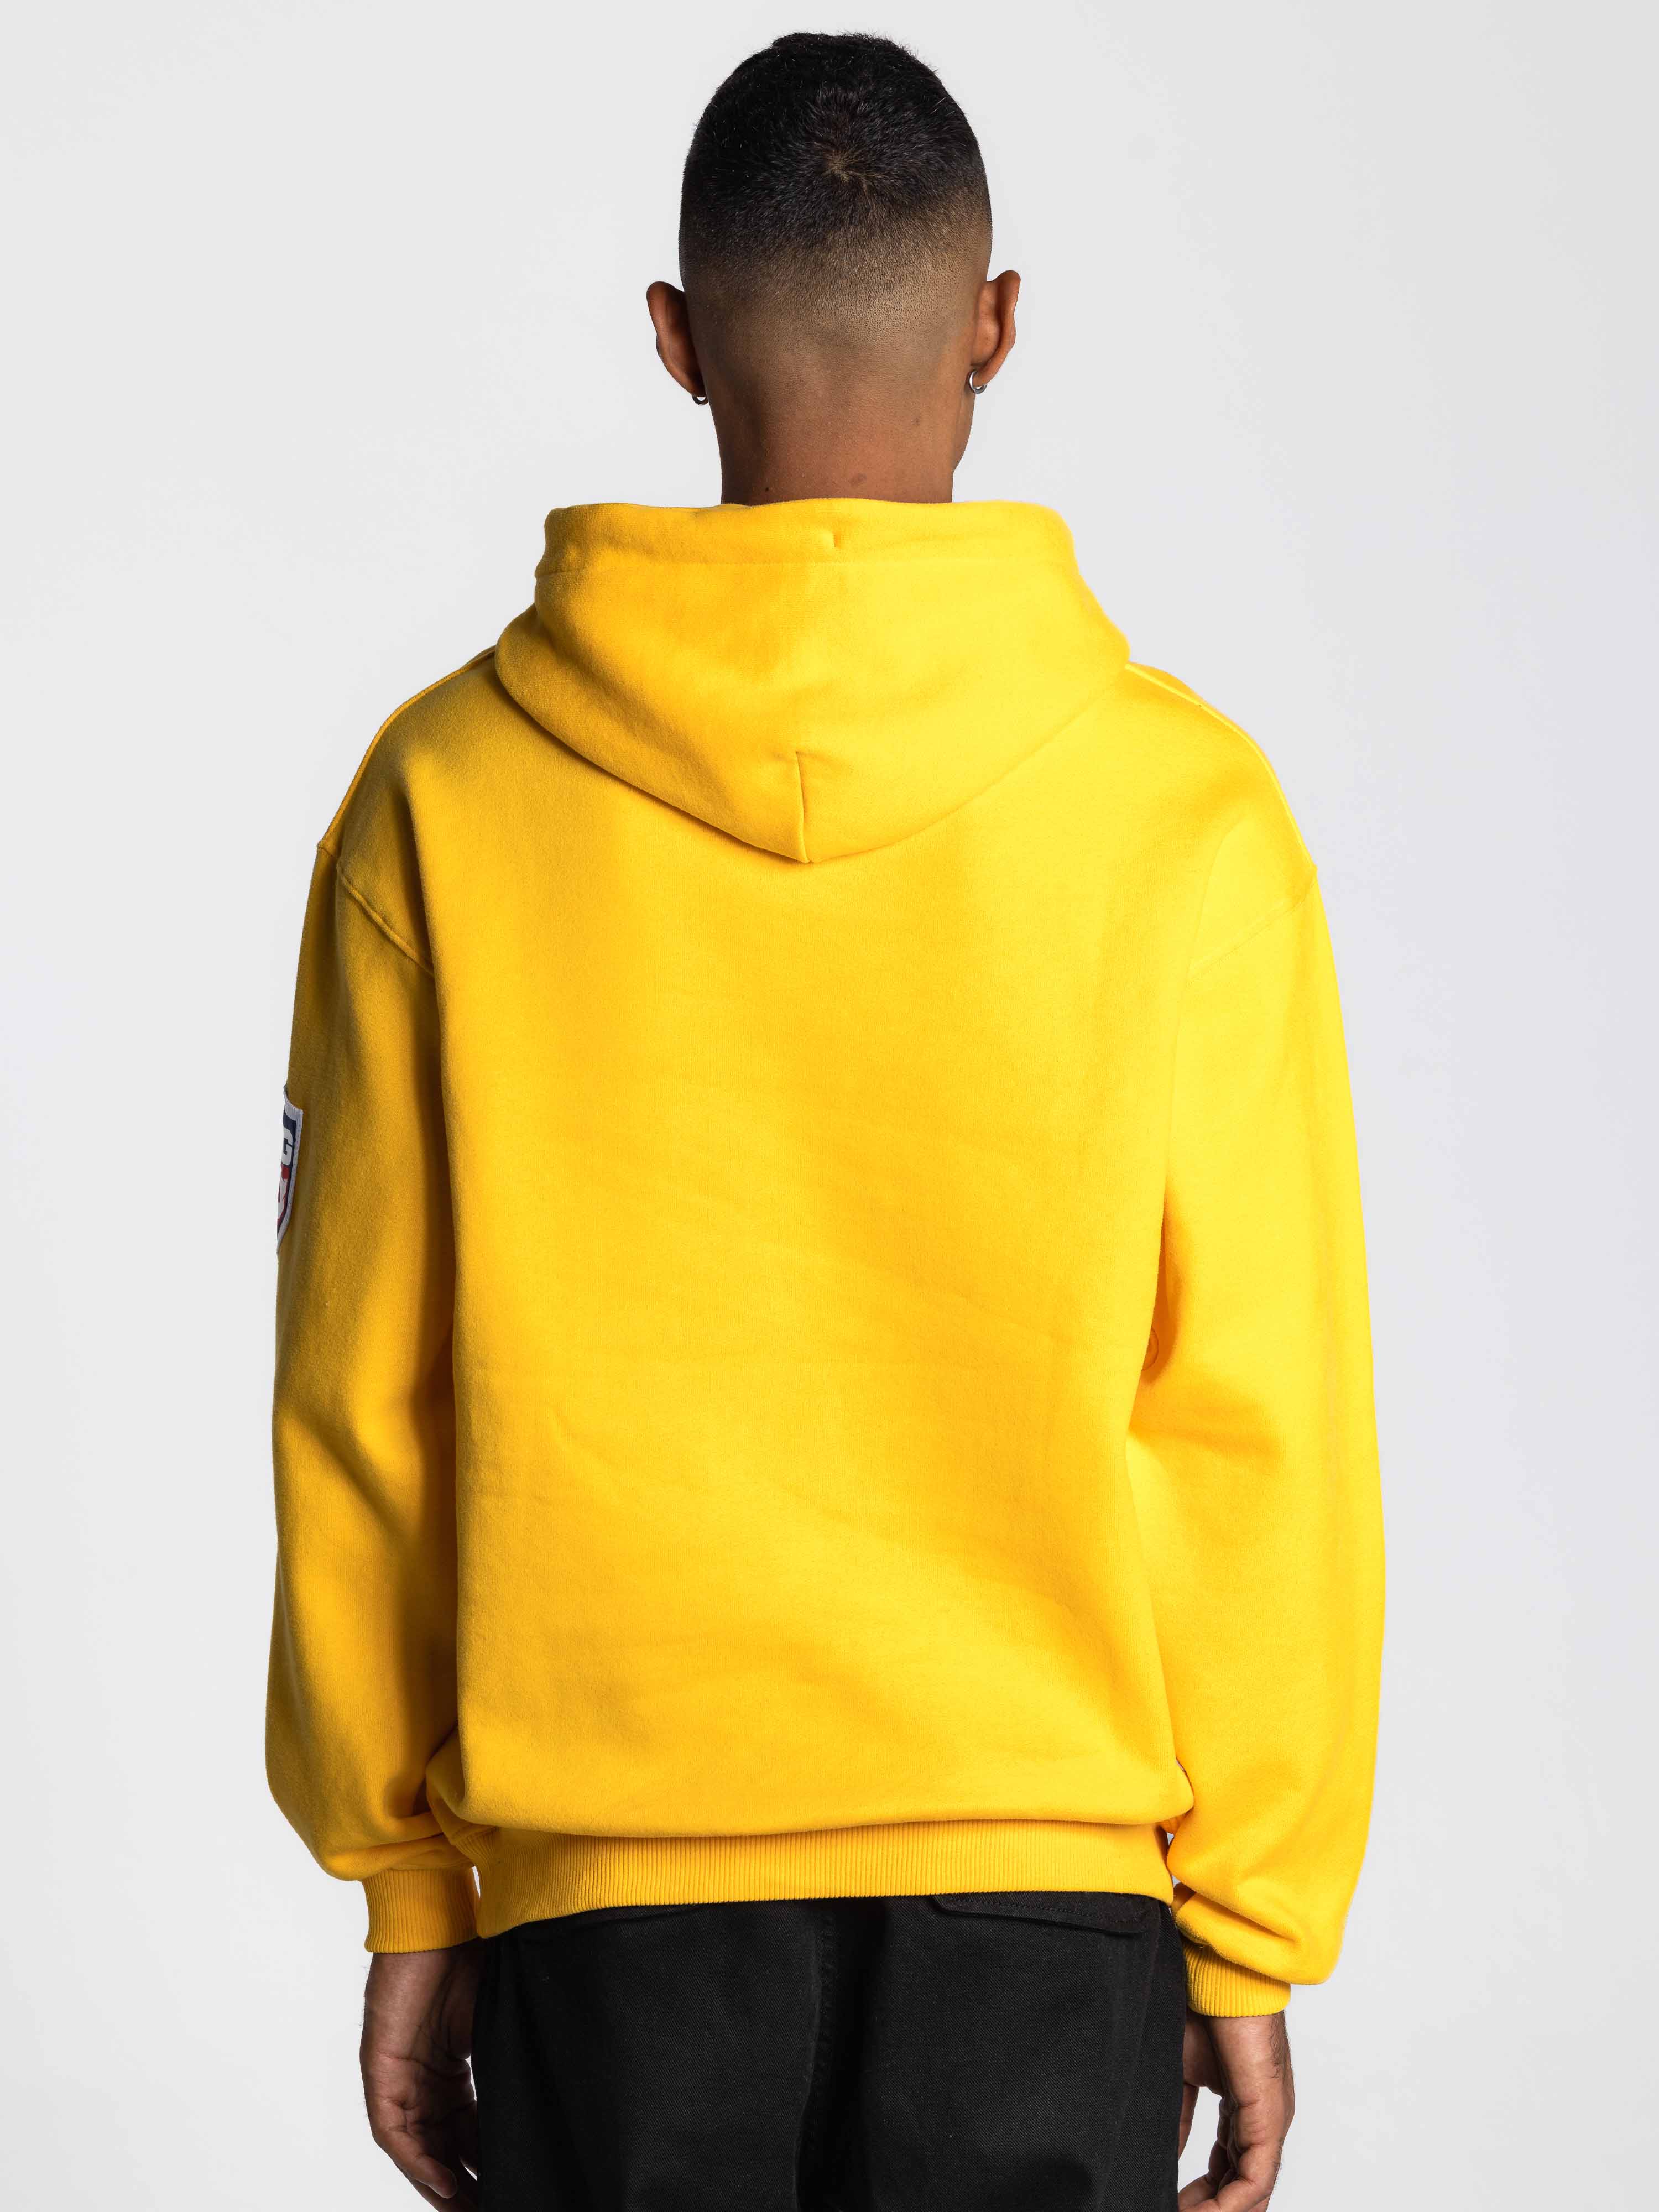 GGR Hoodie yellow | Hoodies & Sweater | Men | GRENZGAENGER Shop